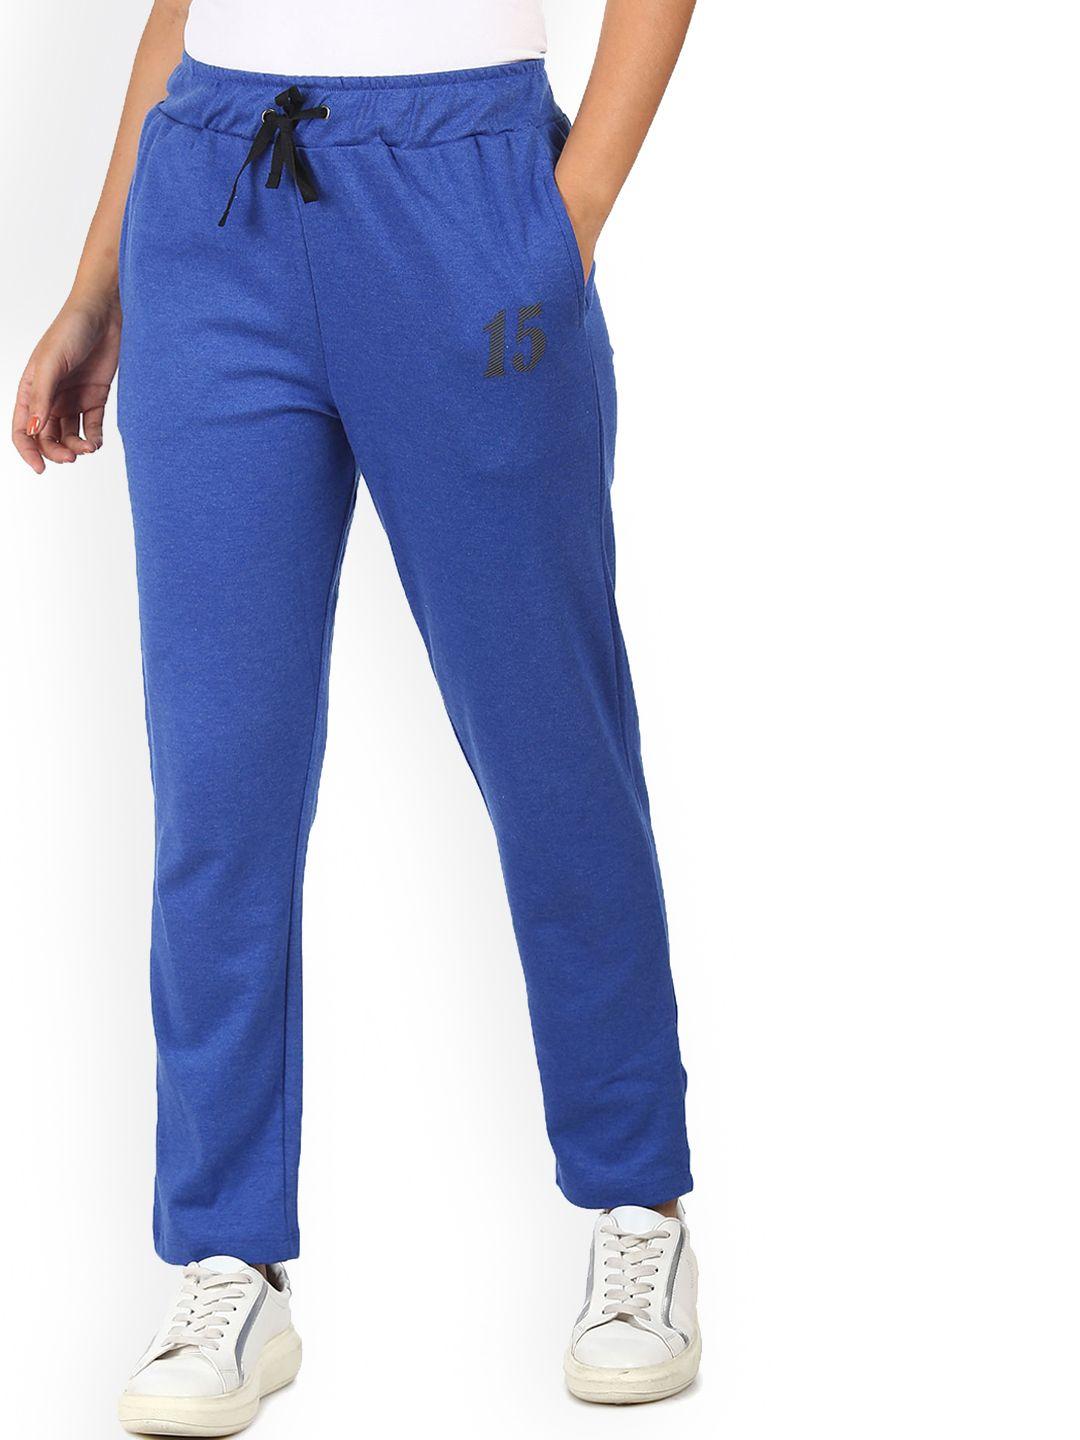 sugr-women-blue-solid-cotton-track-pants